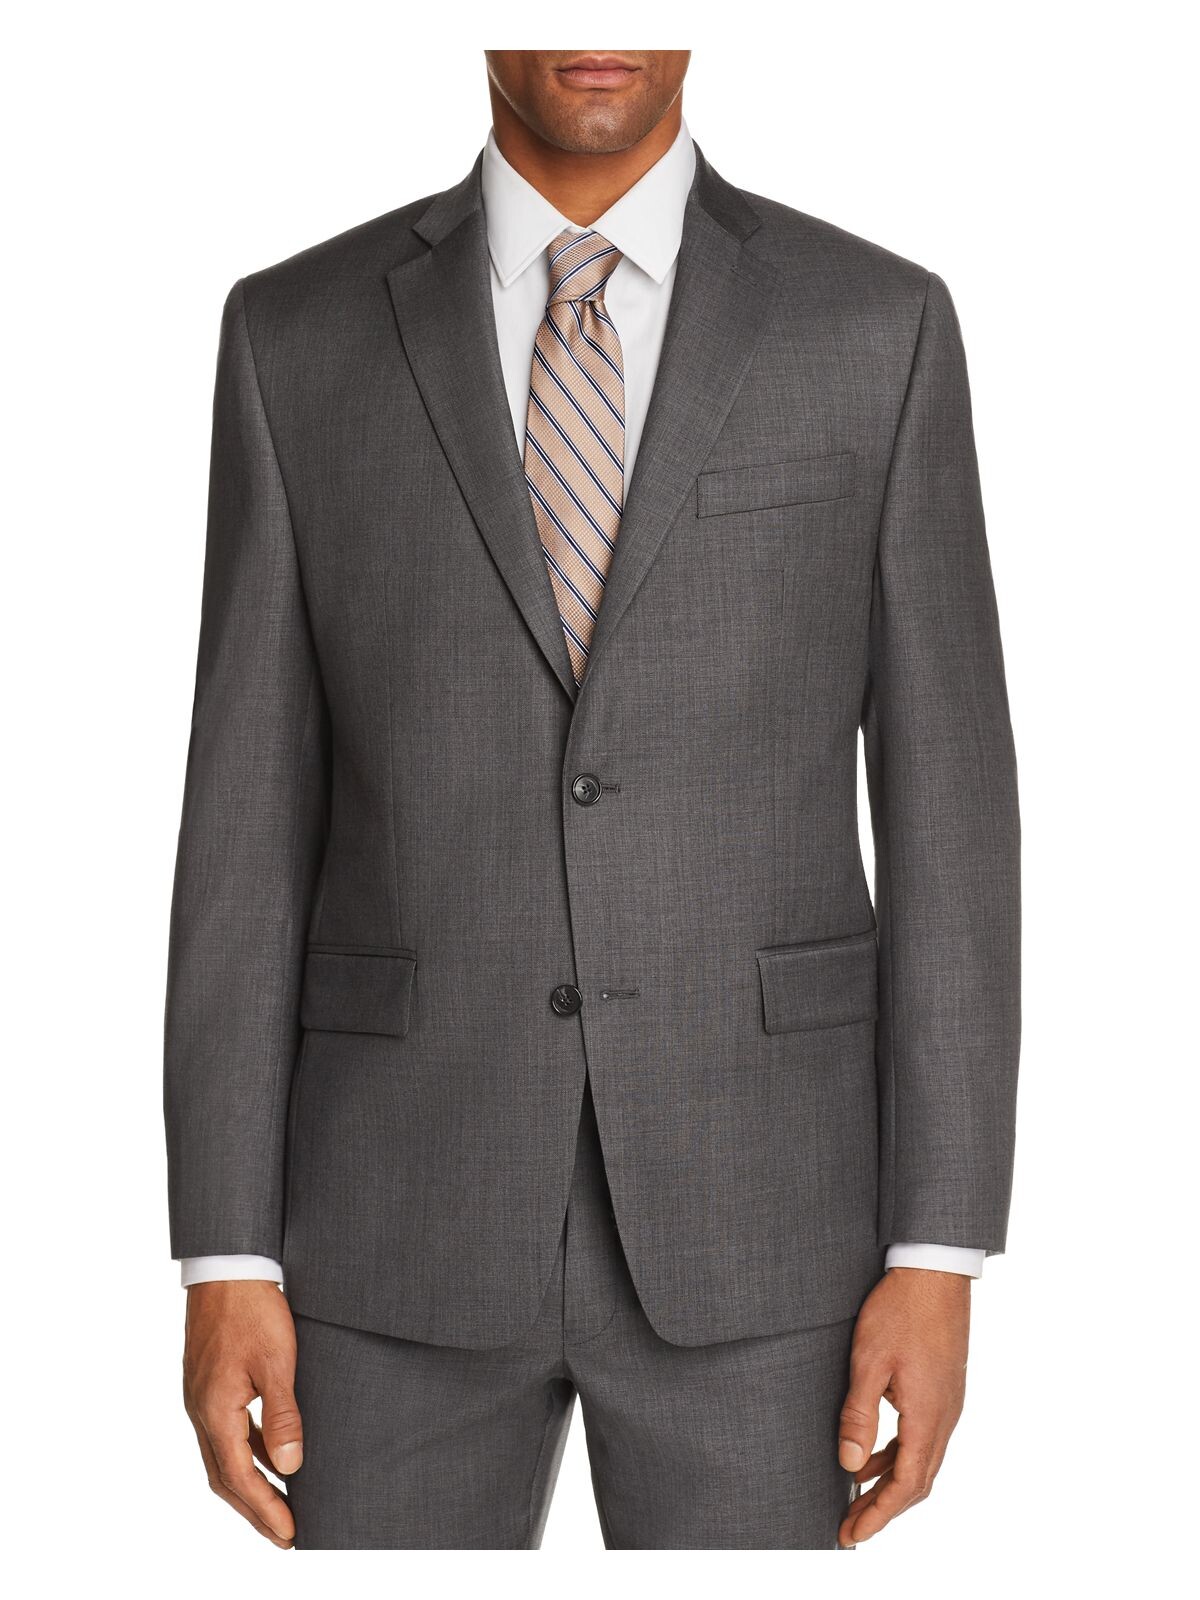 MICHAEL KORS Mens Sharkskin Gray Single Breasted, Classic Fit Wool Blend Blazer 40 - image 1 of 4